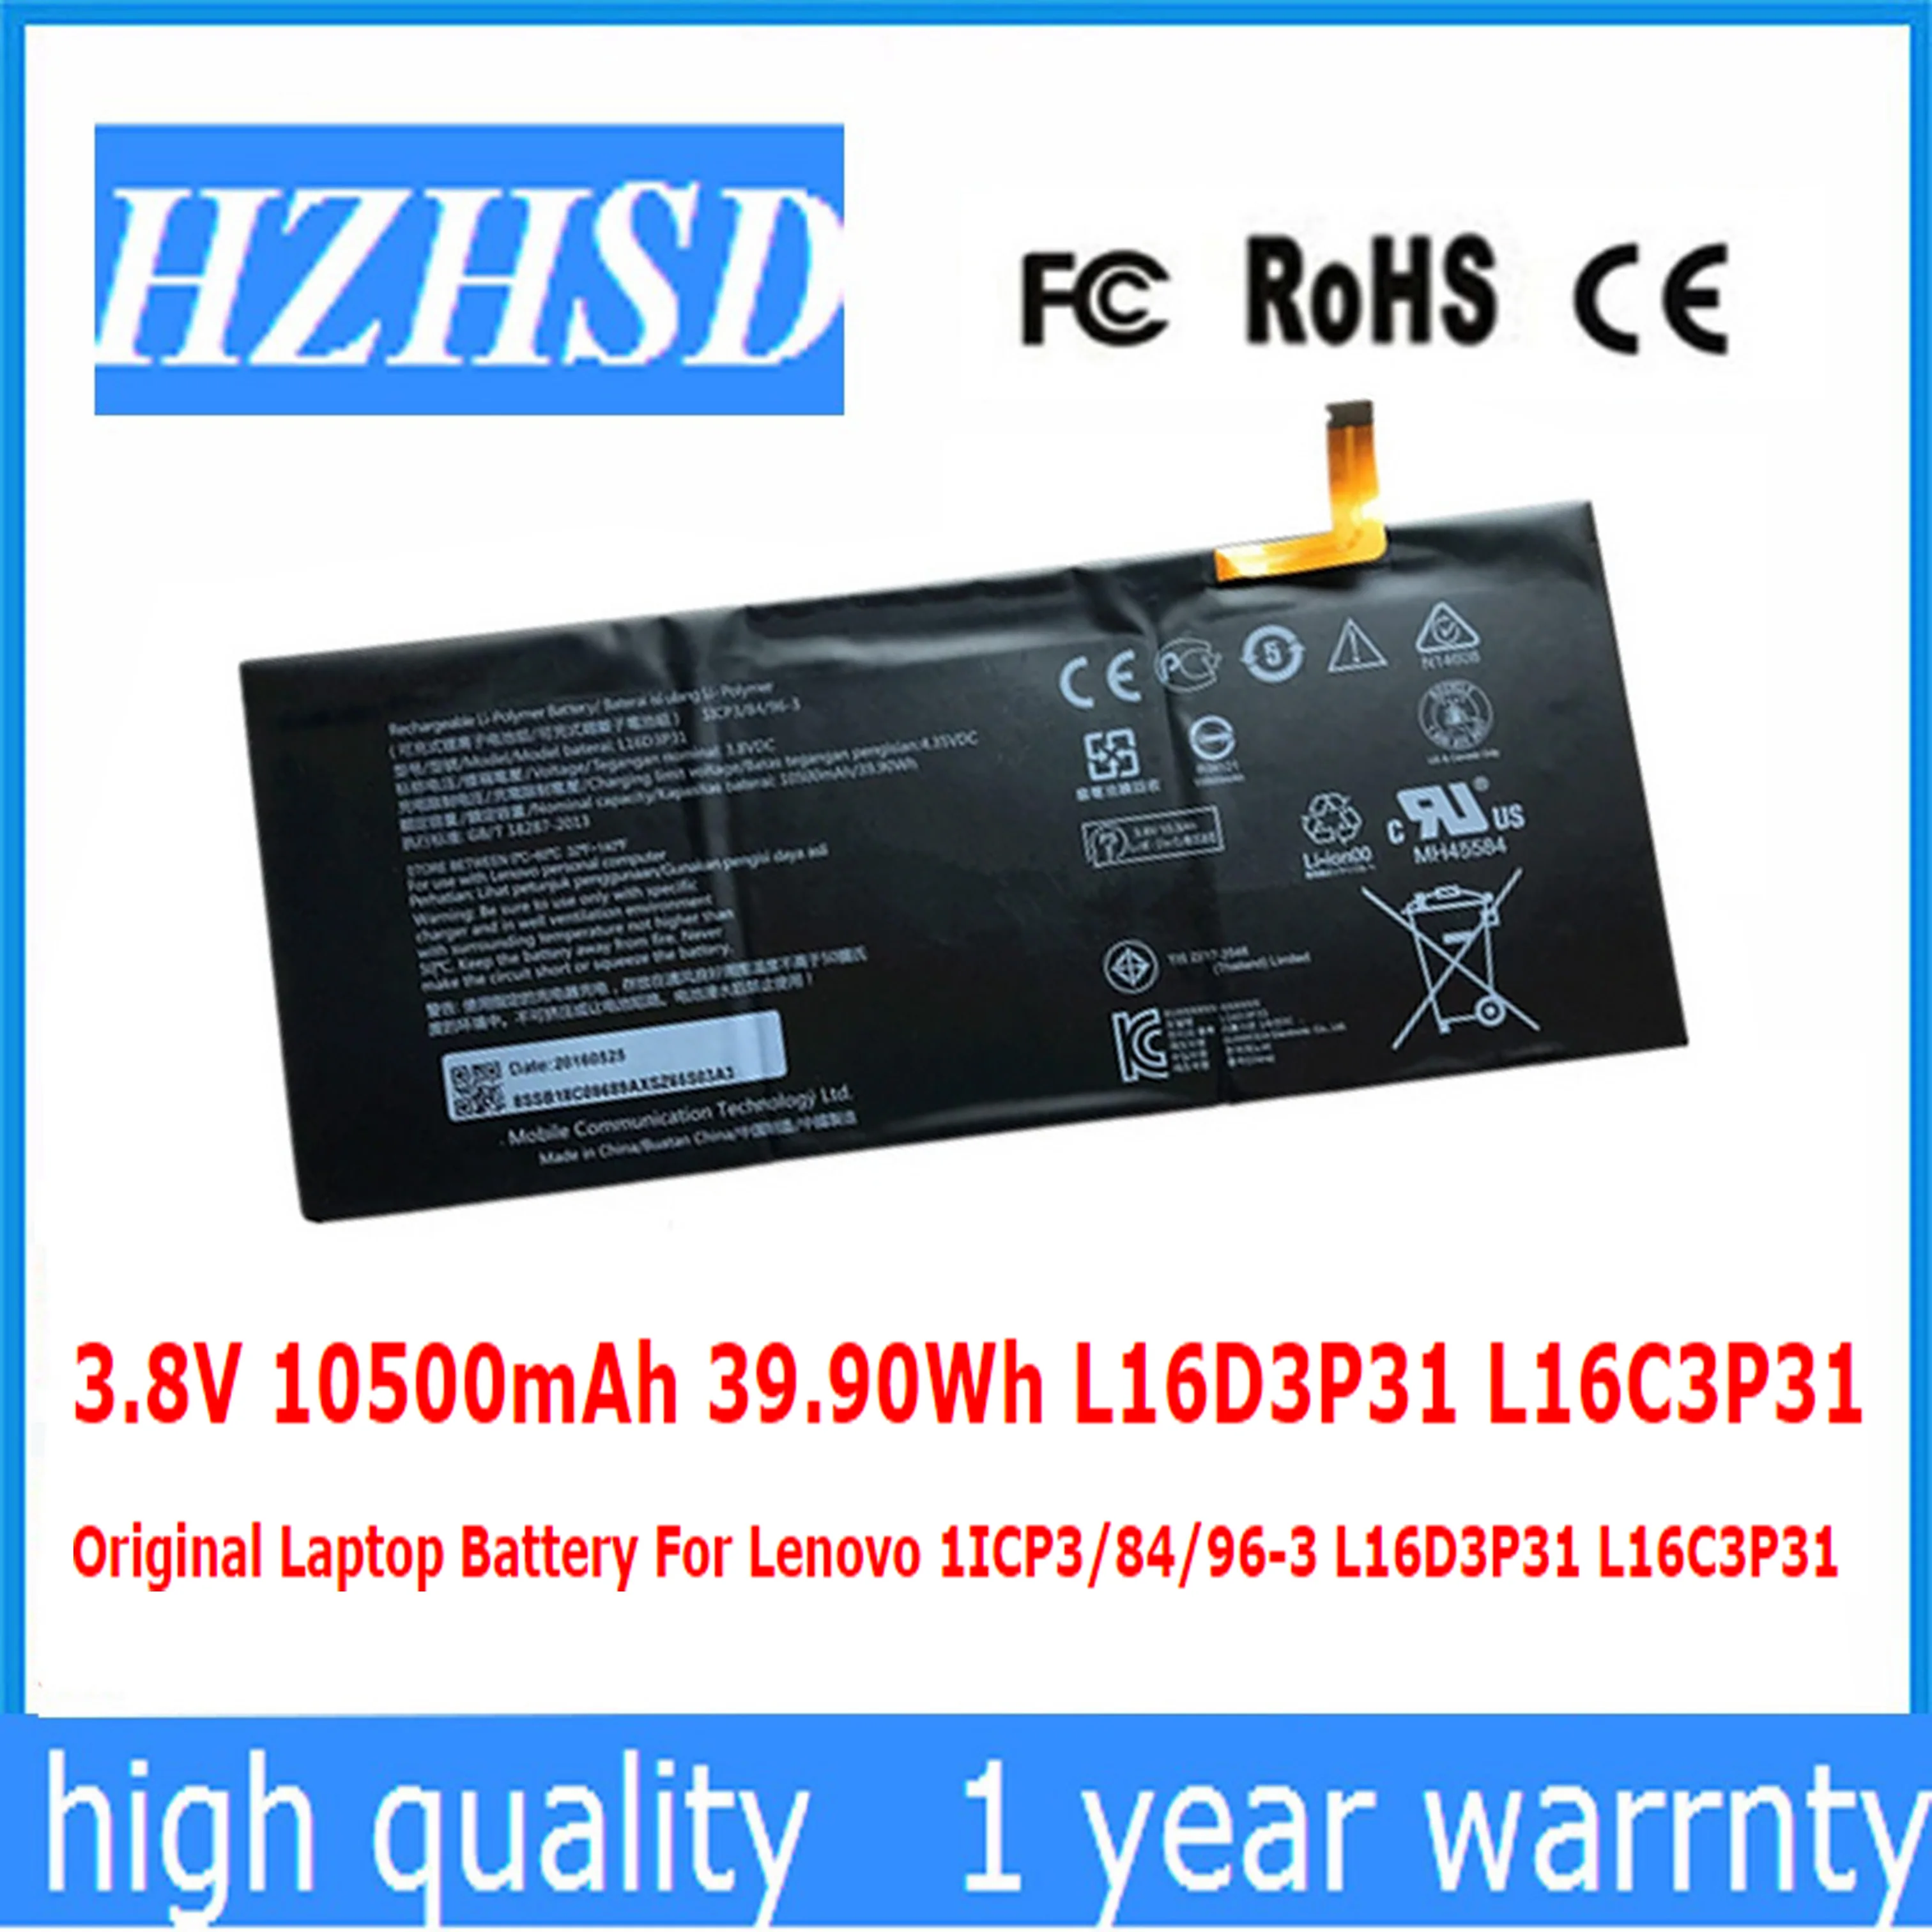 

3.8V 10500mAh 39.90Wh L16D3P31 L16C3P31 Original Laptop Battery For Lenovo 1ICP3/84/96-3 L16D3P31 L16C3P31